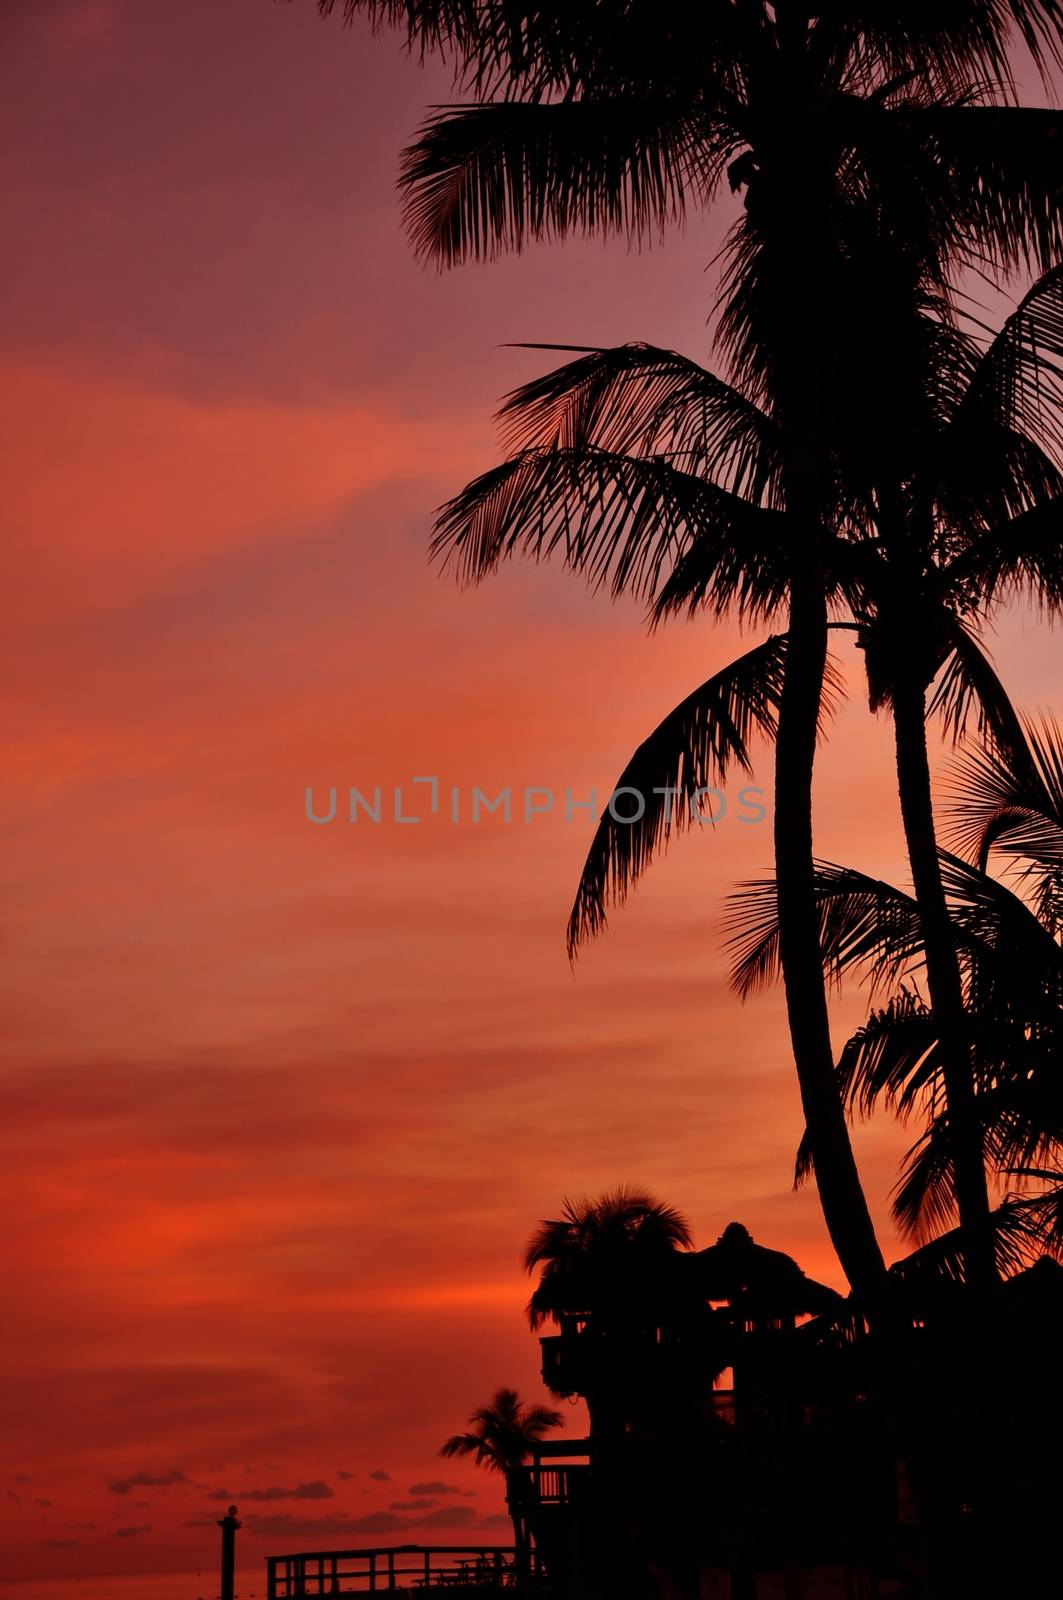 Exotic Sunset Background. Florida Keys. Great Shot for Vertical Design. Left Side Content Ready.